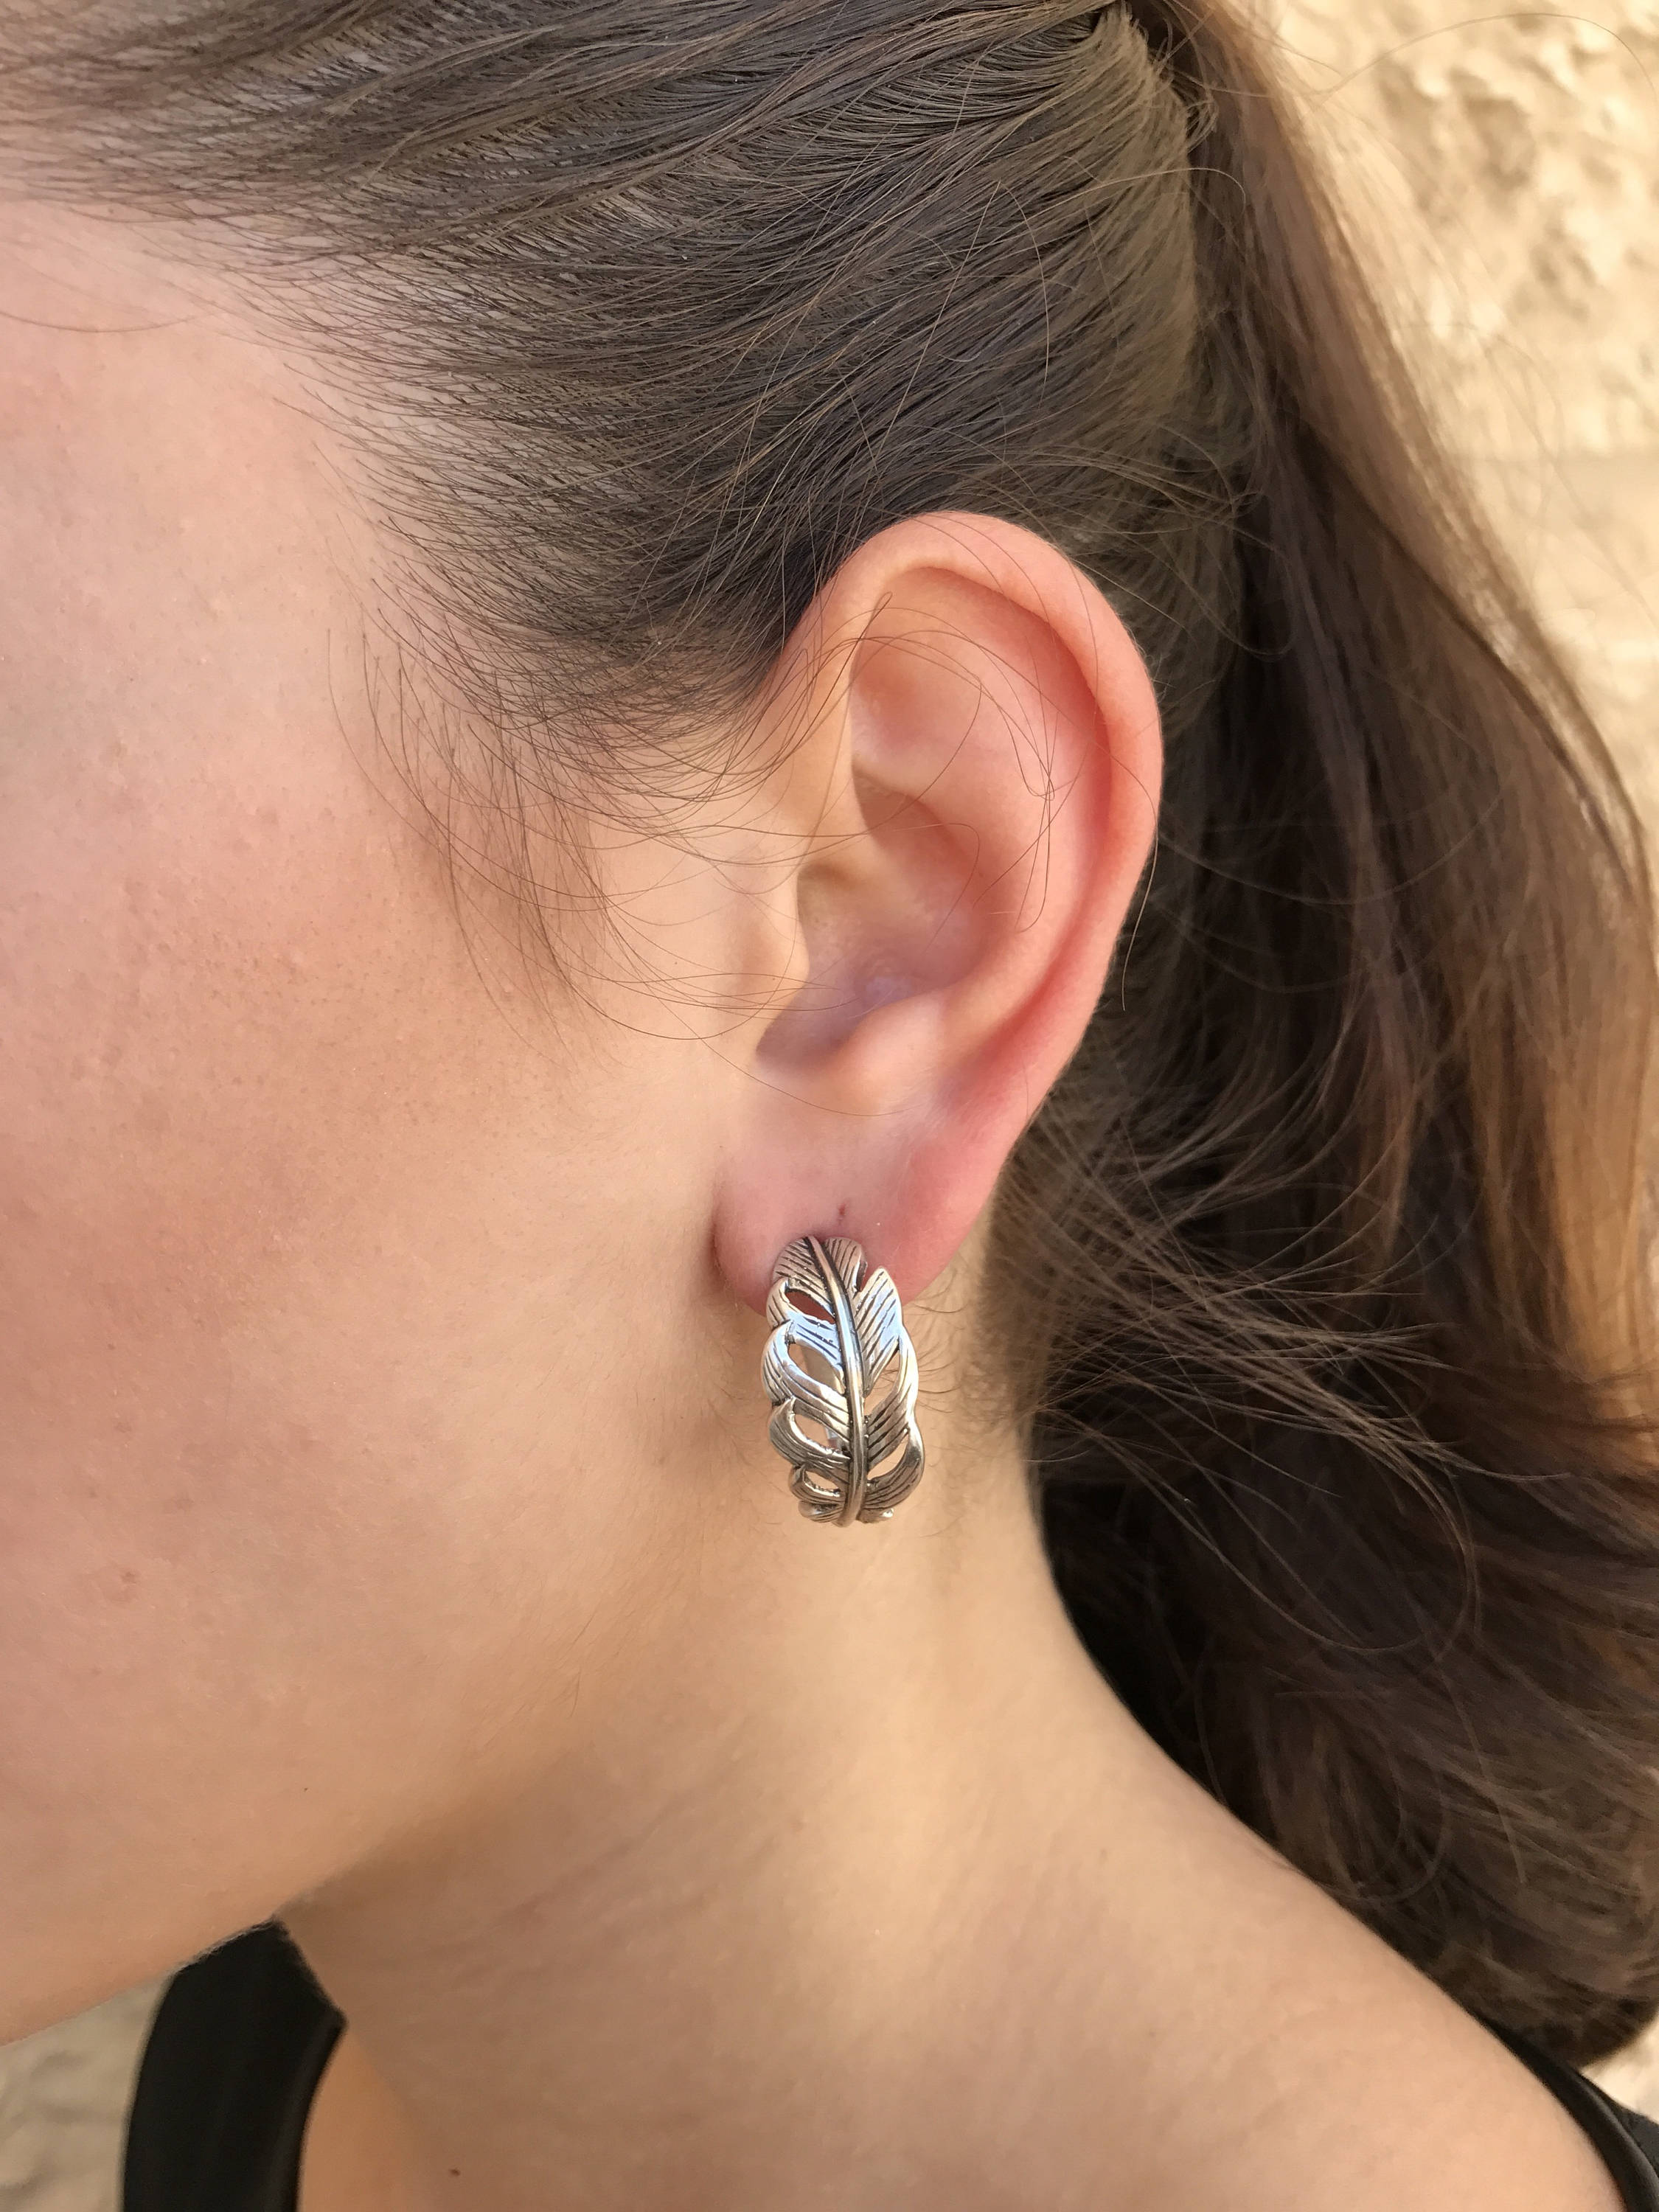 Leaf Earrings, Silver Leaf Earrings, Solid Silver Earrings, Statement Earrings, Unique Art Earrings, Artistic Earrings, Sterling Silver